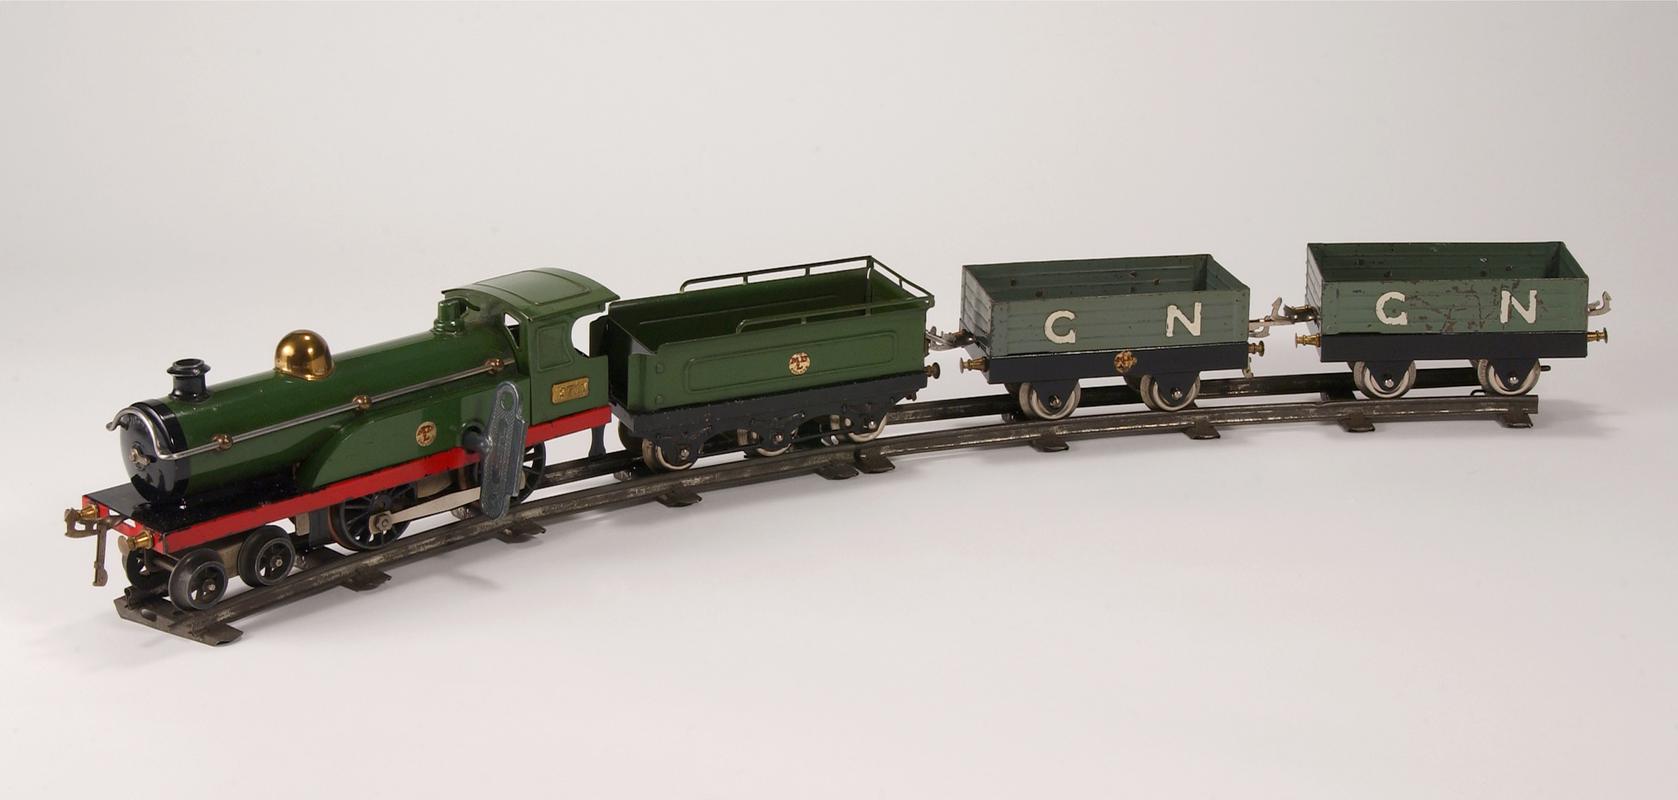 Tinplate "O" gauge GNR goods train